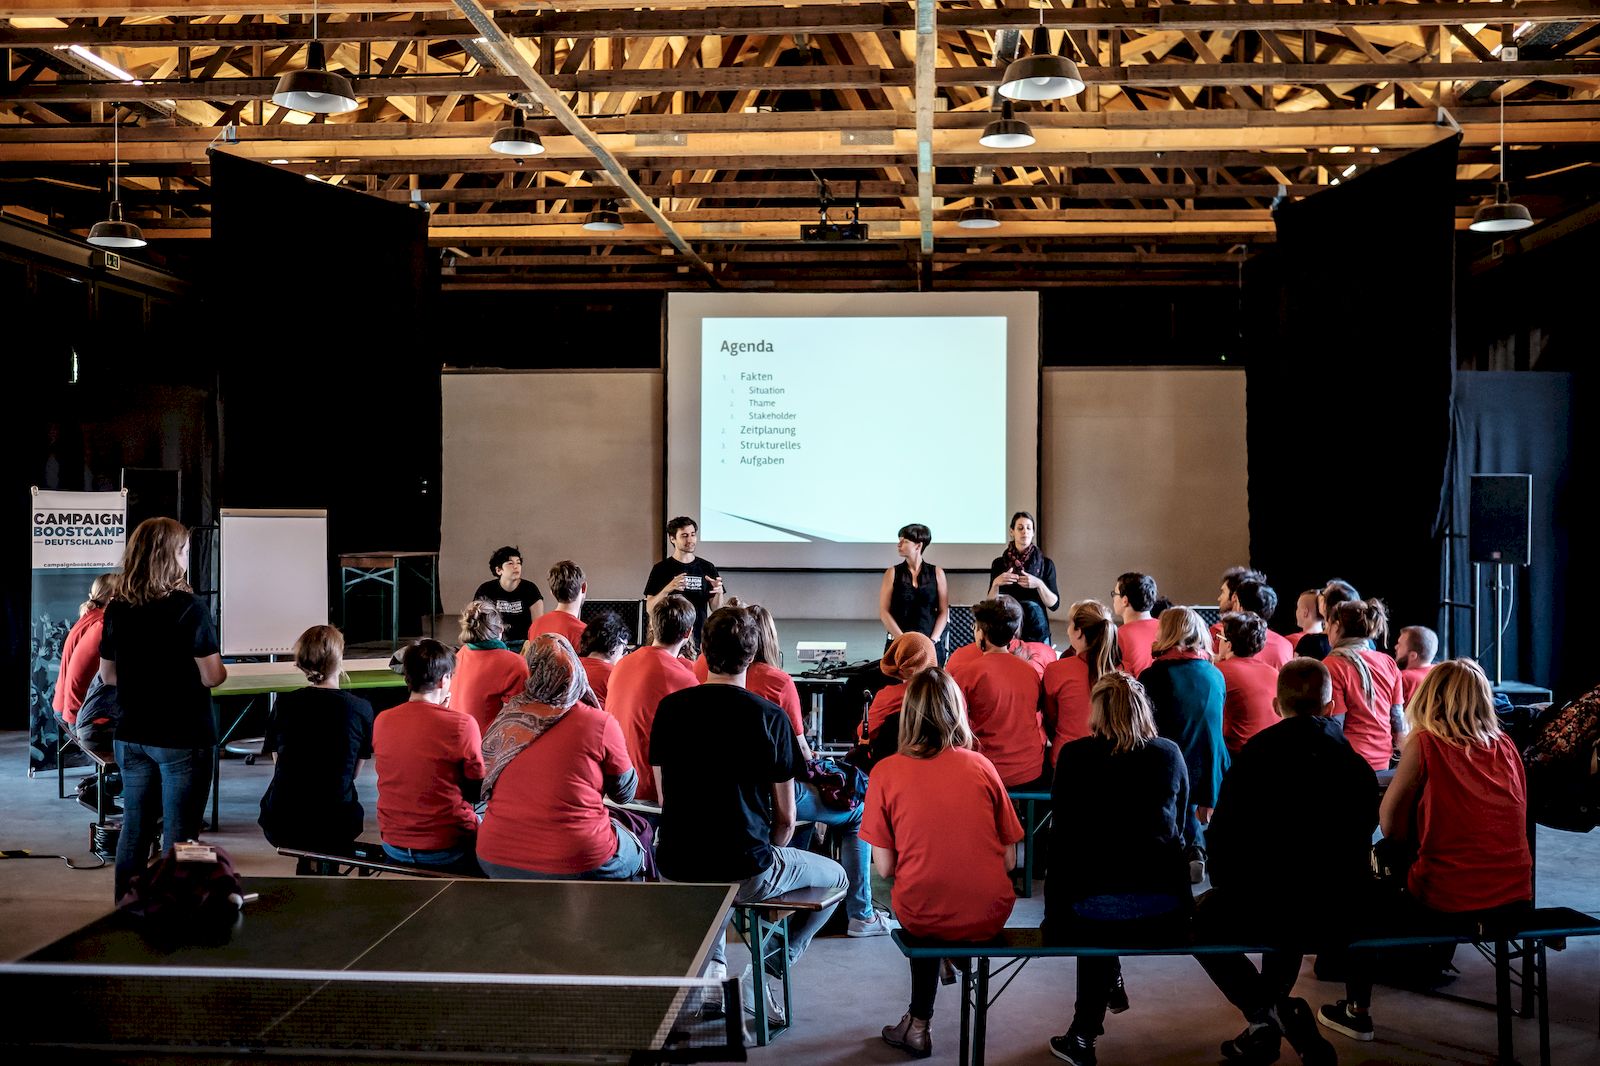 Campaign Boostcamp 2015 (Foto: Andi Weiland, www.andiweiland.de)